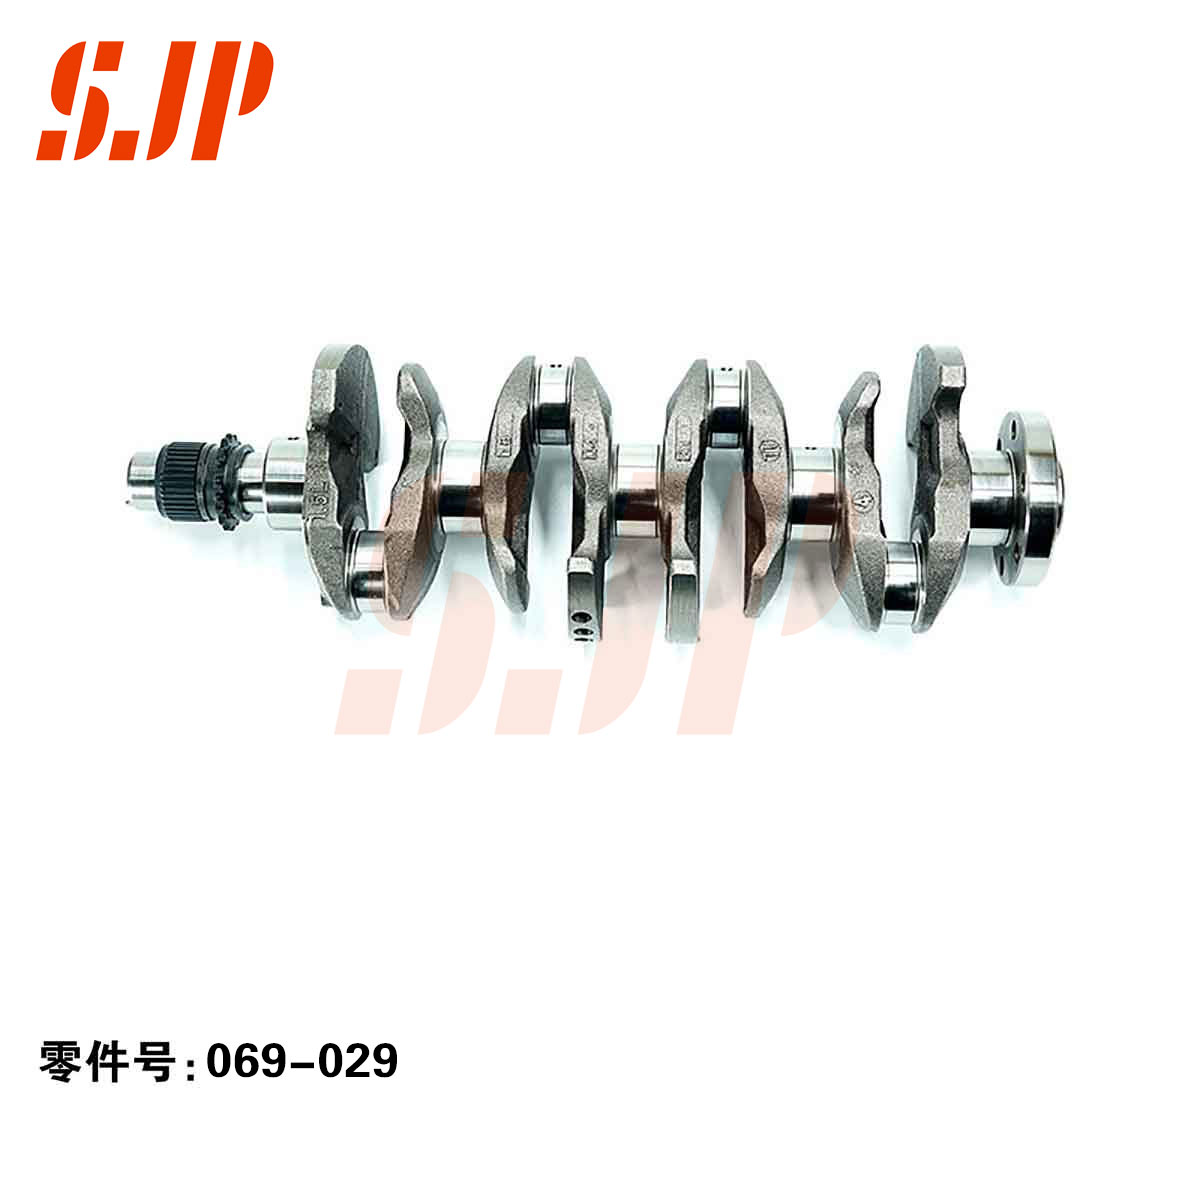 SJ-069-029 Crankshaft For 4A91/TNN4G15A/B DG15/With Screw and Bearing